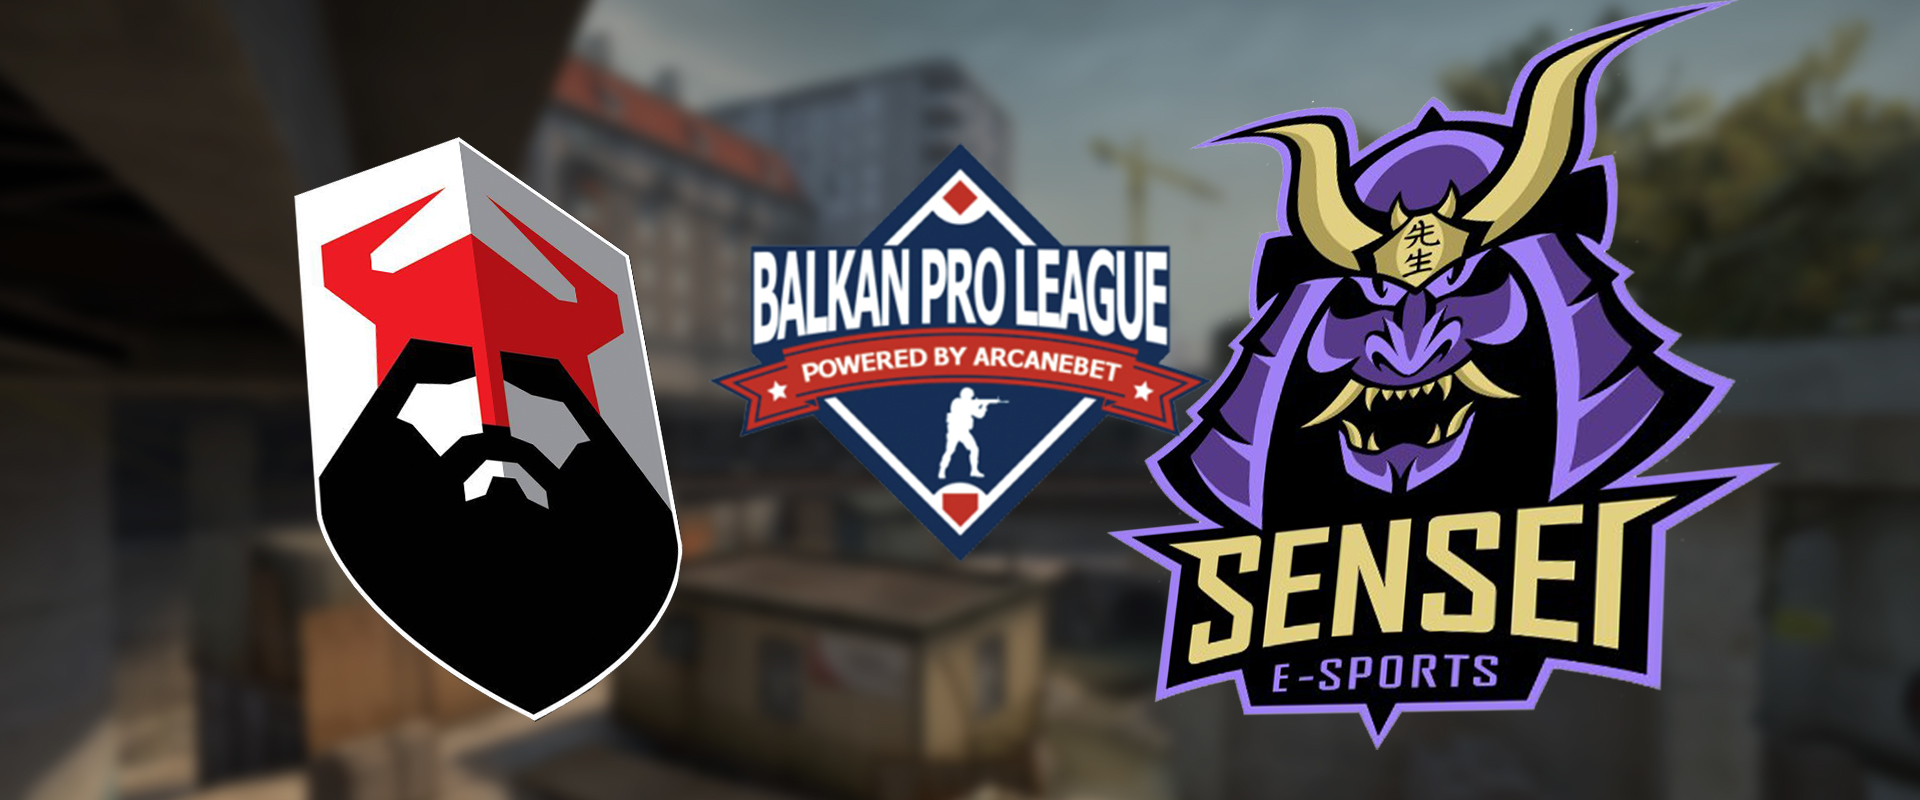 Végül két magyar csapat is bejutott a Balkan Pro League-be